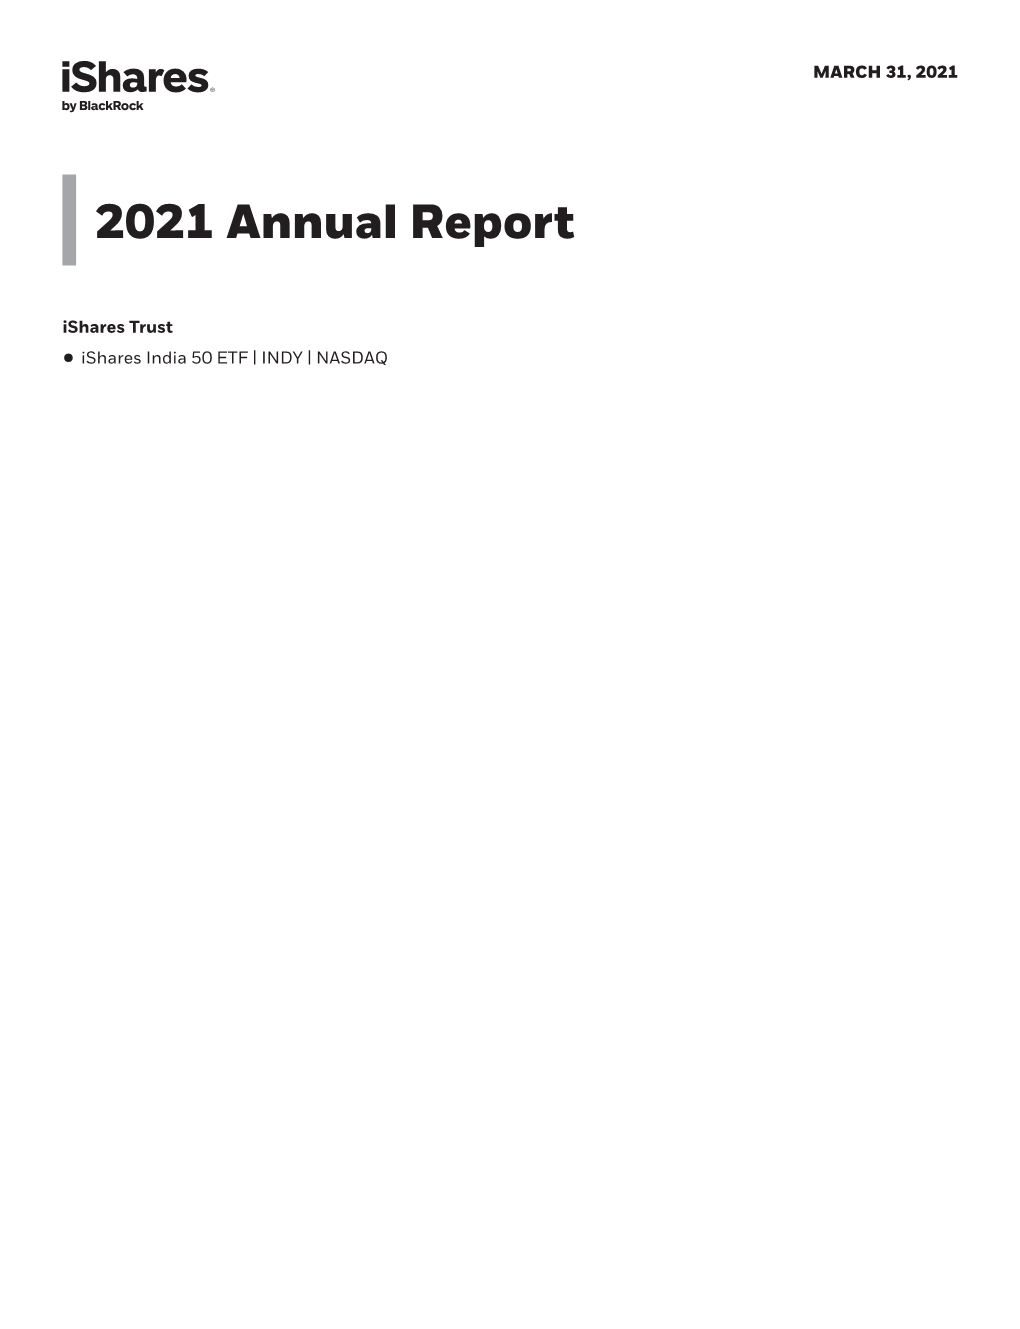 2021 Annual Report Ishares Trust • Ishares India 50 ETF | INDY | NASDAQ